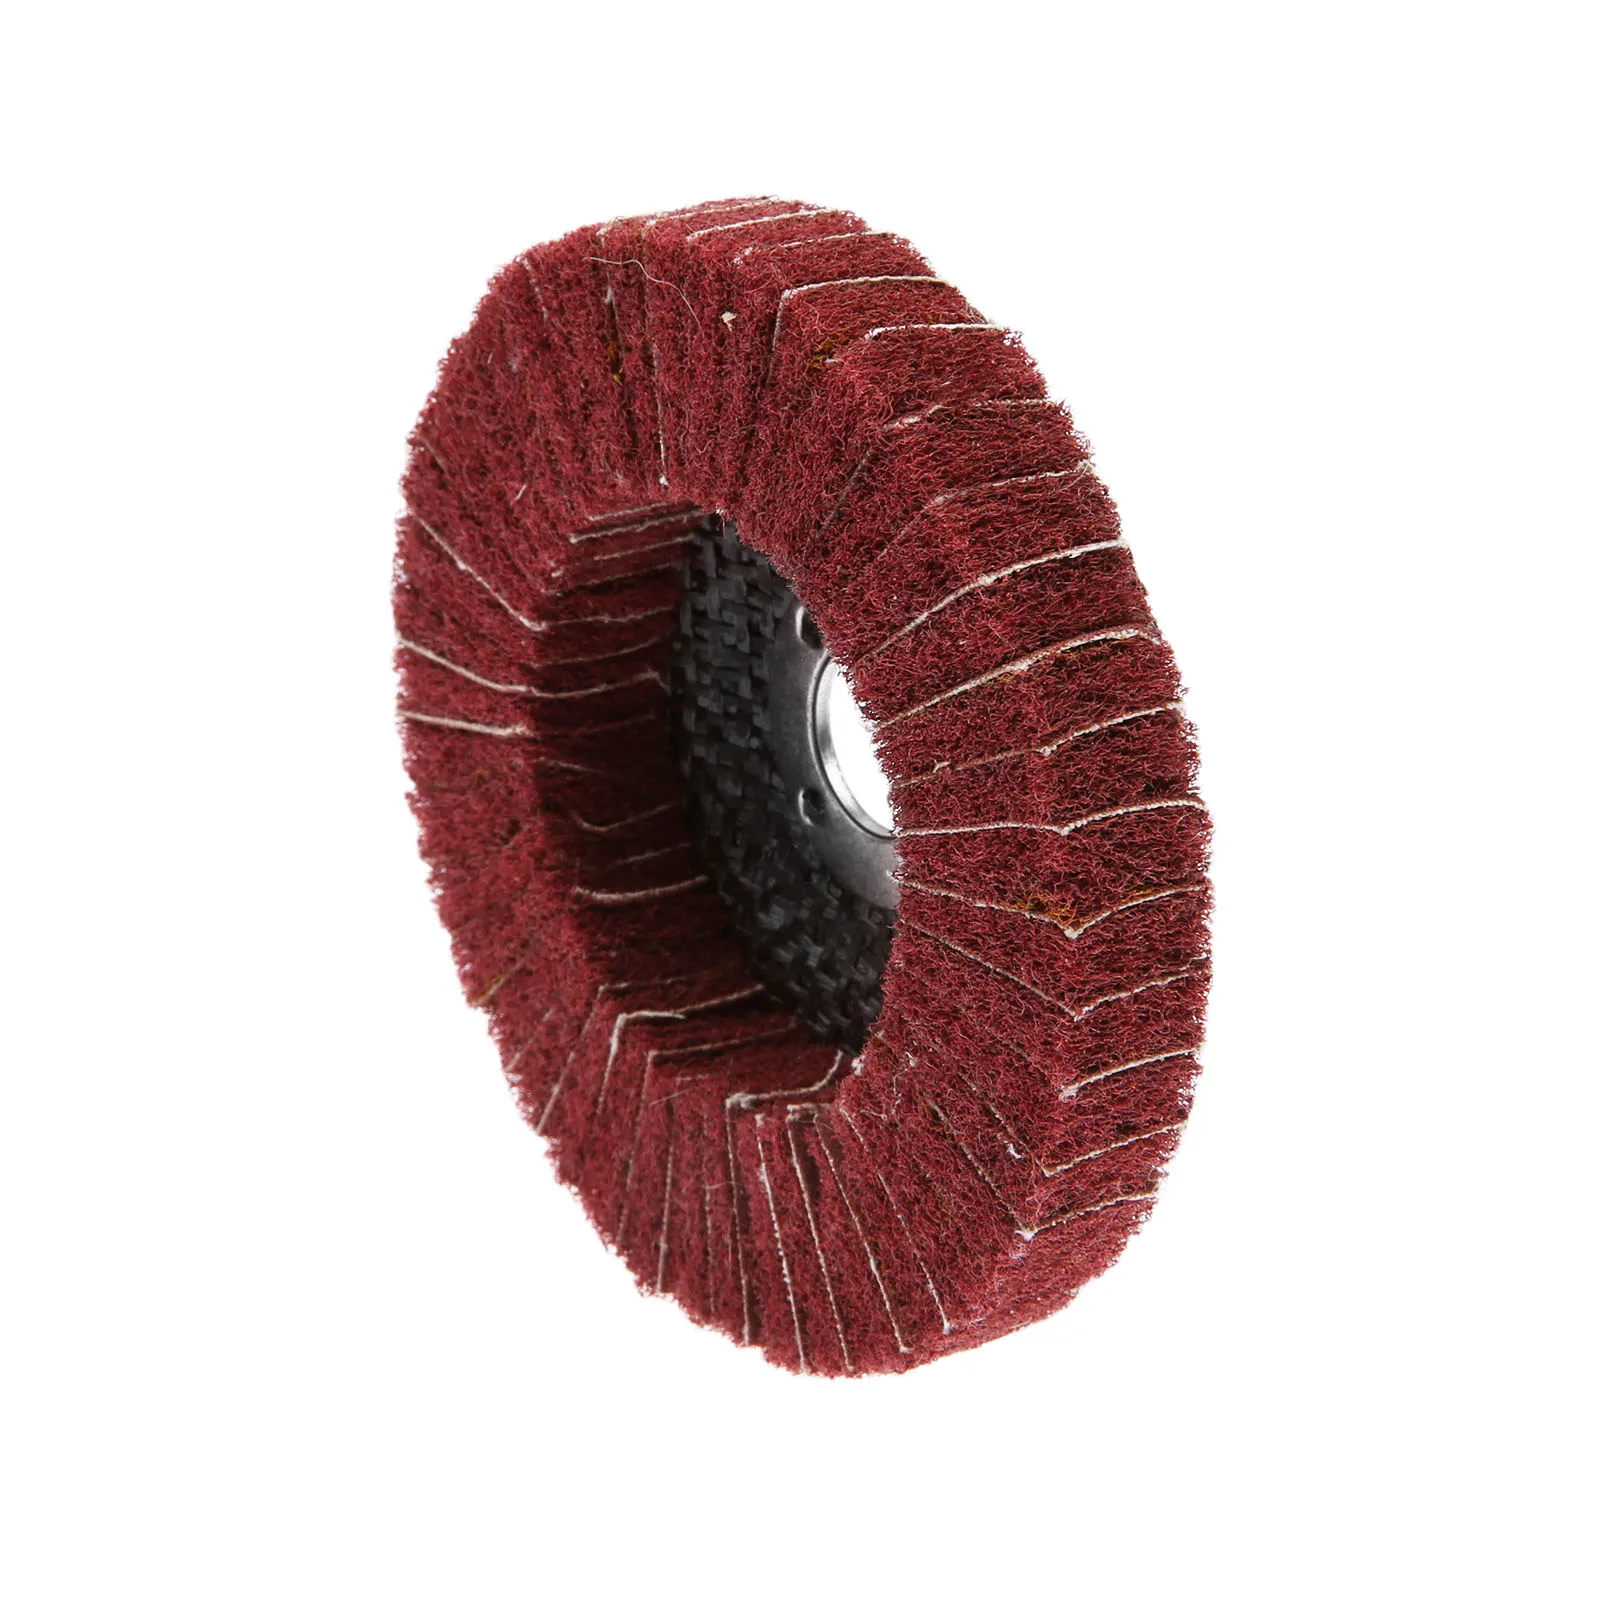 DRELD 1Pc Dremel Accessories Red 100mm 4" Nylon Fiber Flap Polishing Grinding Wheel Disc for Angle Grinder Polishing Tools